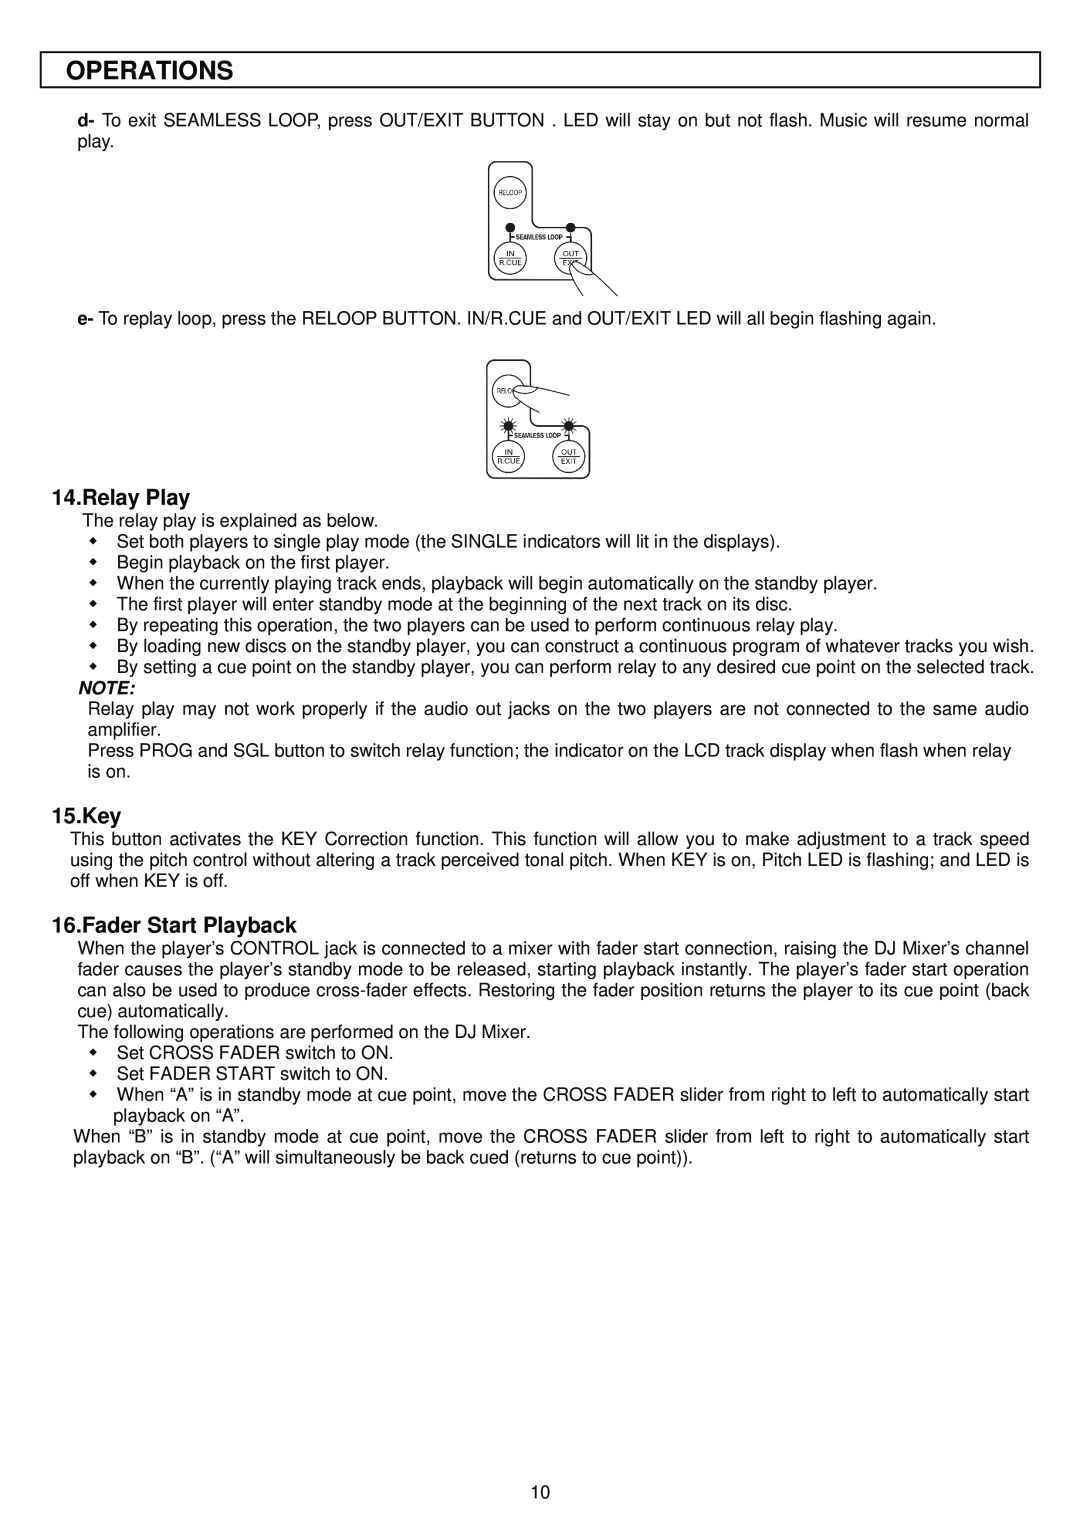 Stanton S-650 MK II manual Relay Play, 15.Key, Fader Start Playback, Operations 